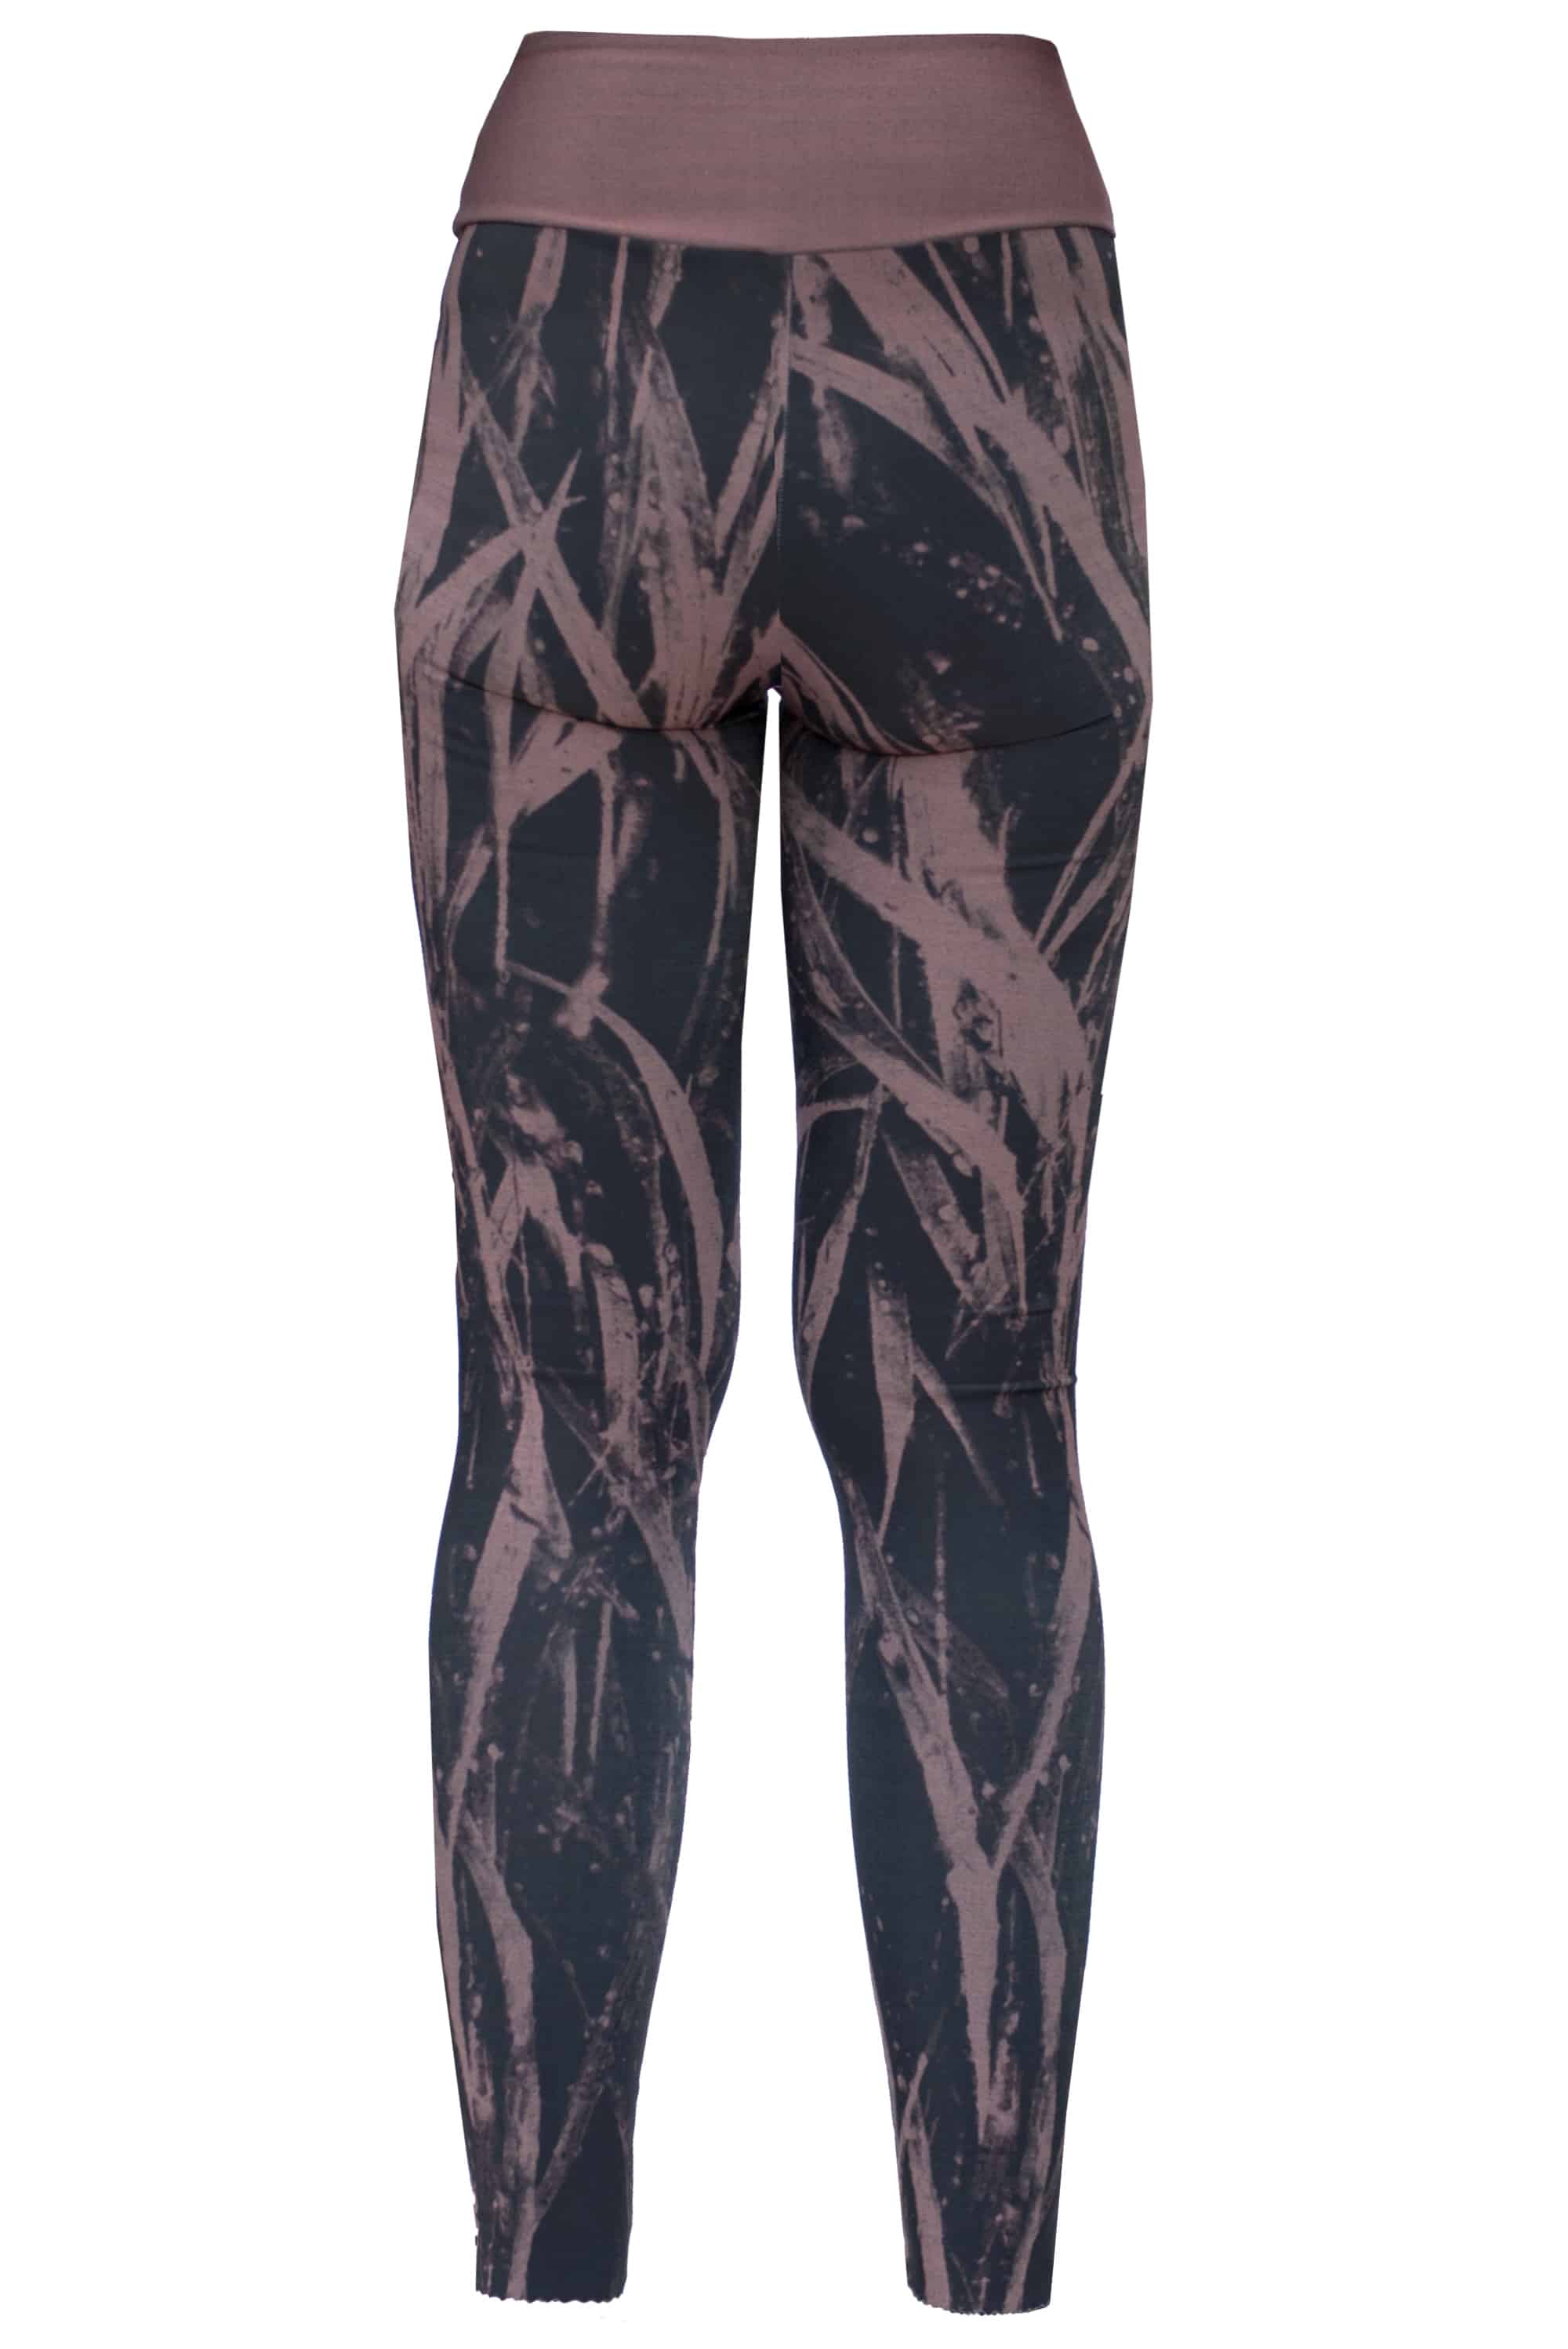 Schwarze Leggings mit abstraktem blush-farbenem Muster in Seegrasoptik, Rückansicht